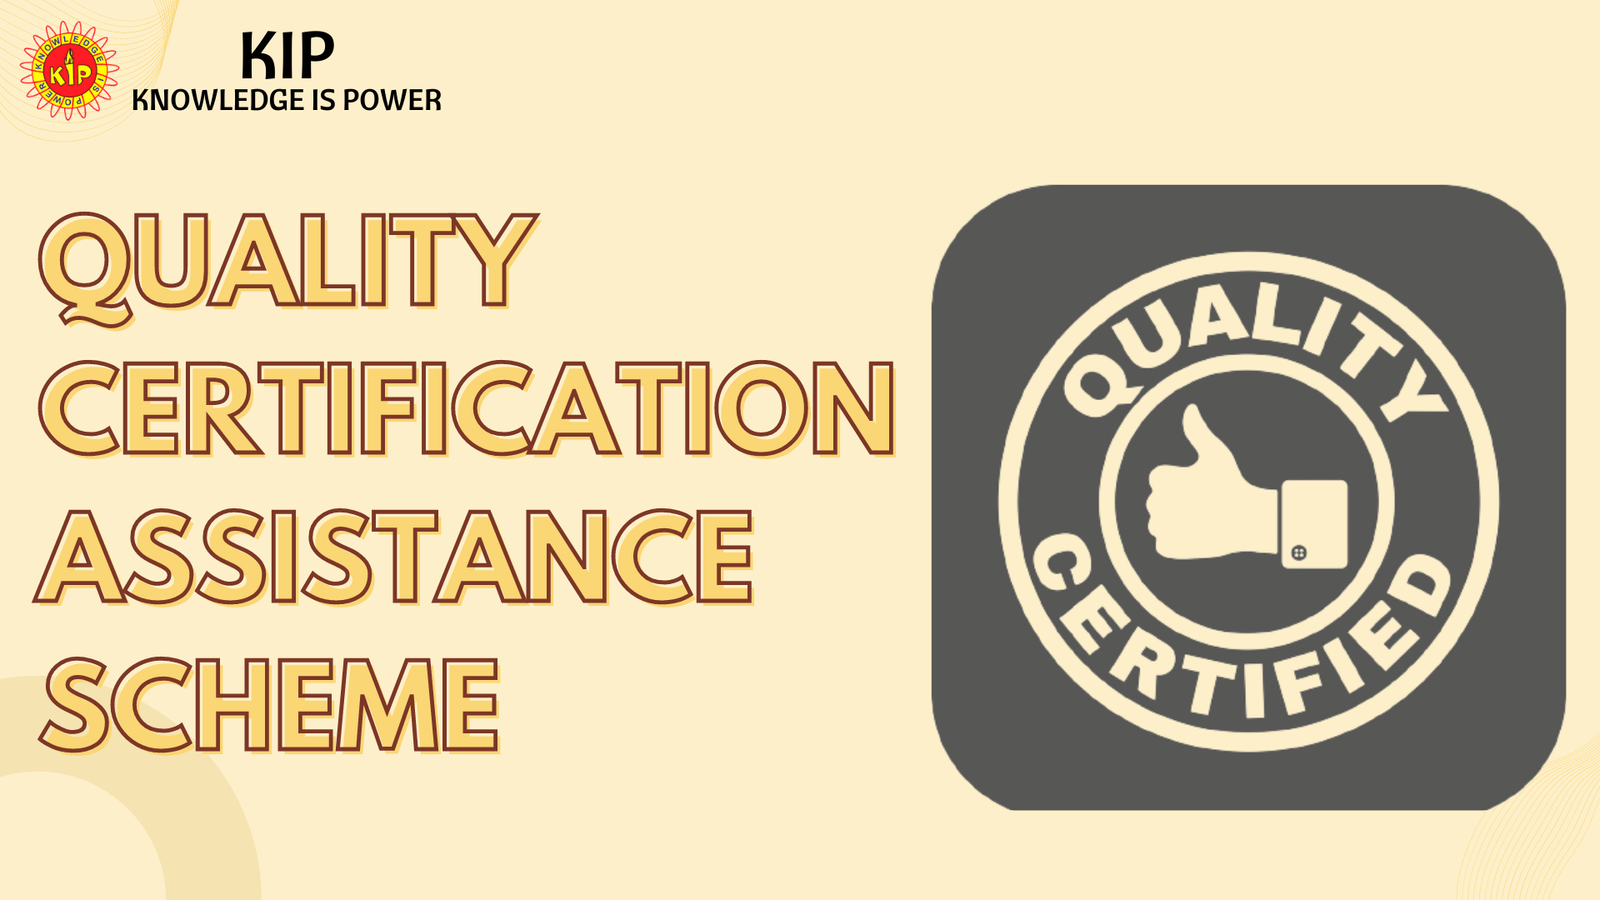 Quality Certification Assistance Scheme